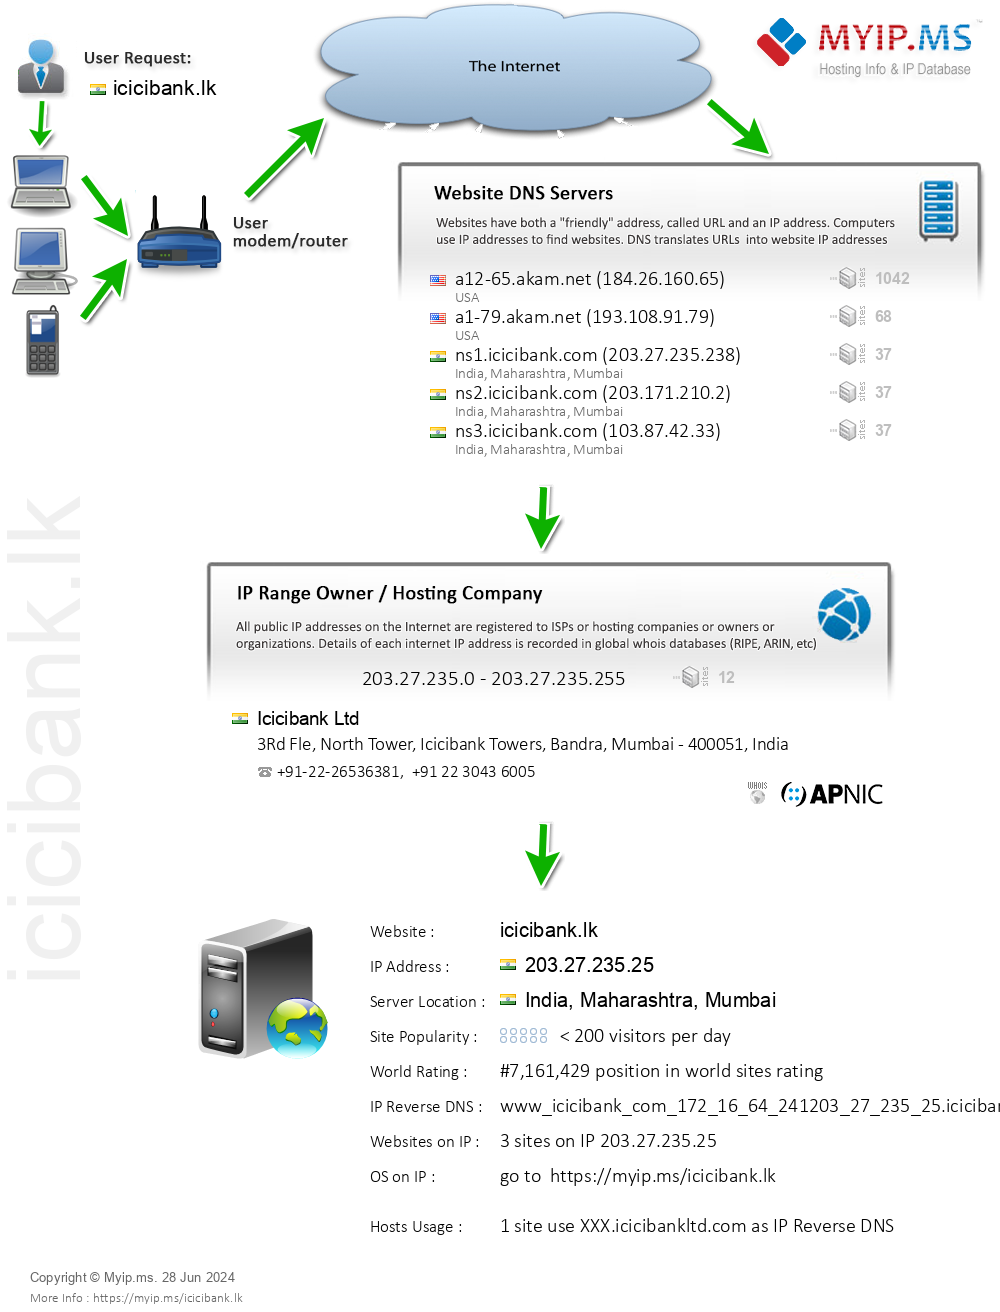 Icicibank.lk - Website Hosting Visual IP Diagram